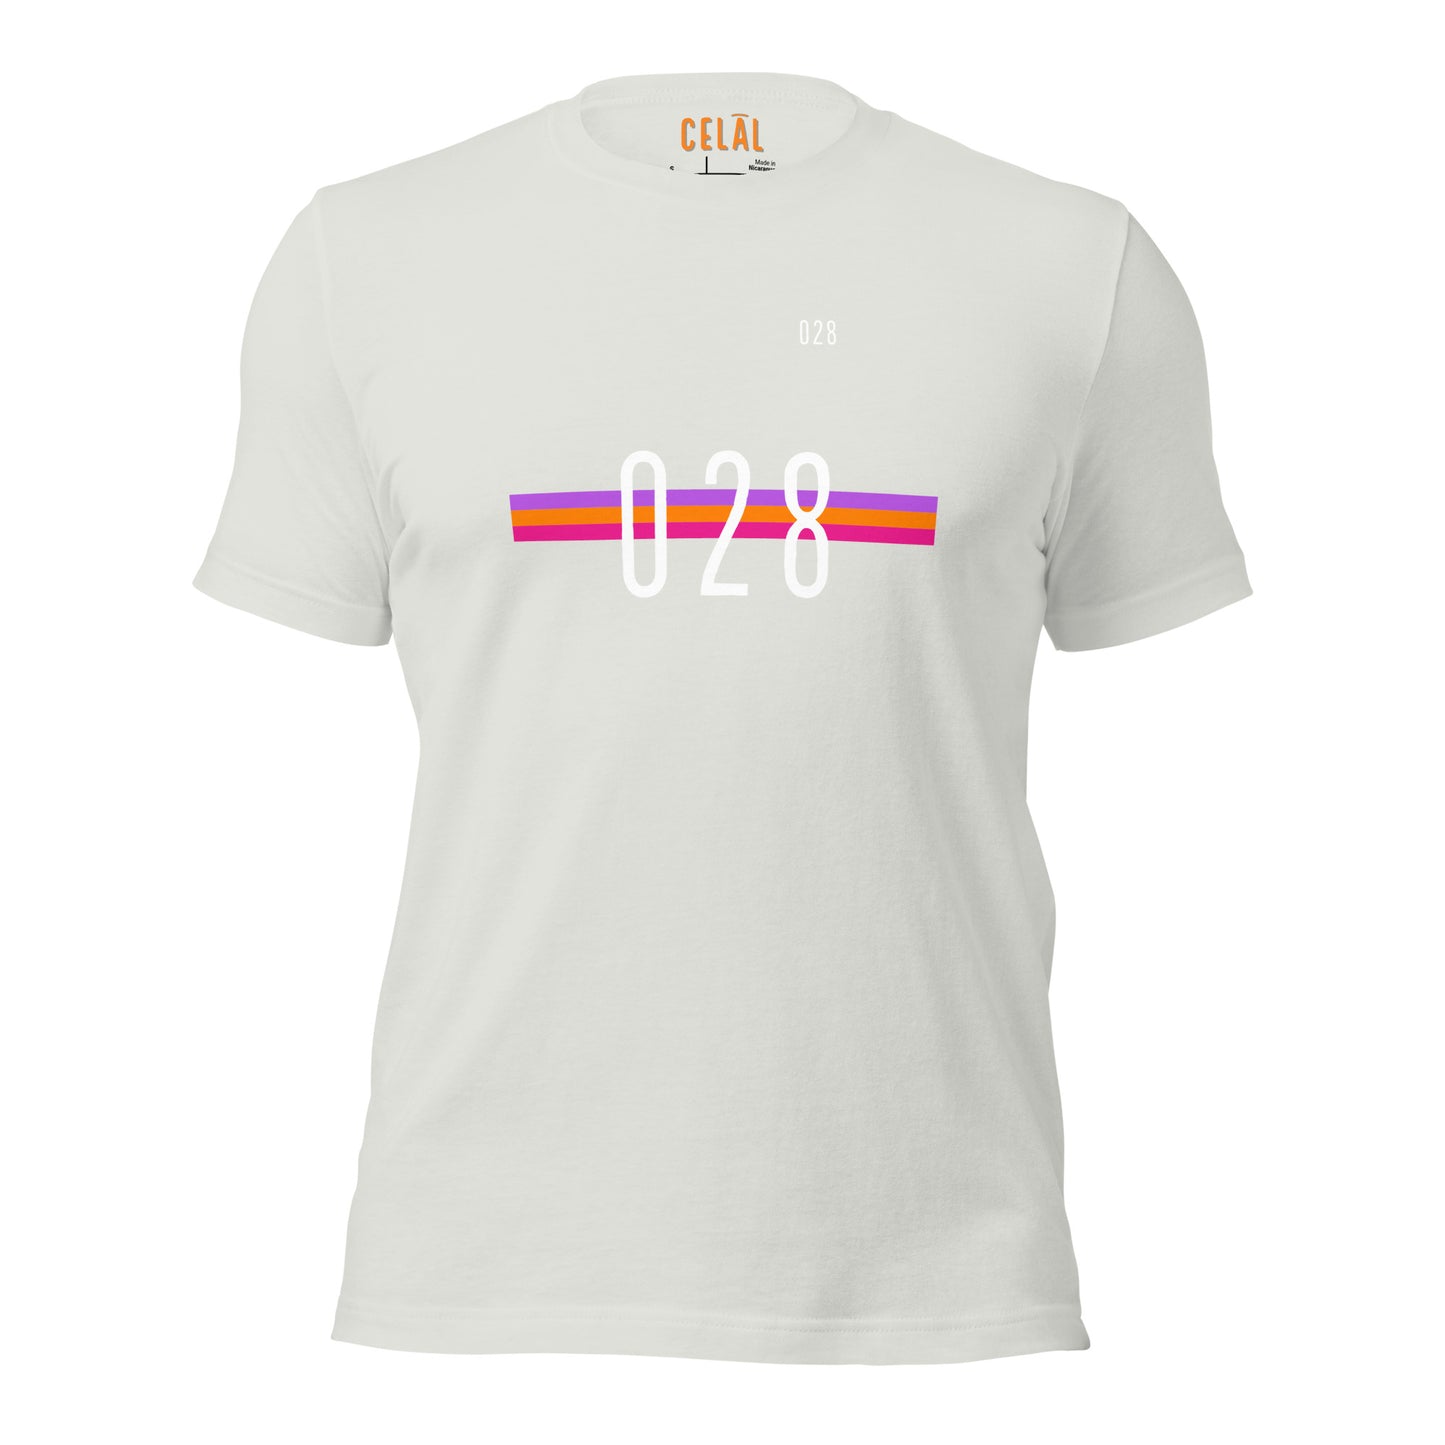 028 Unisex t-shirt